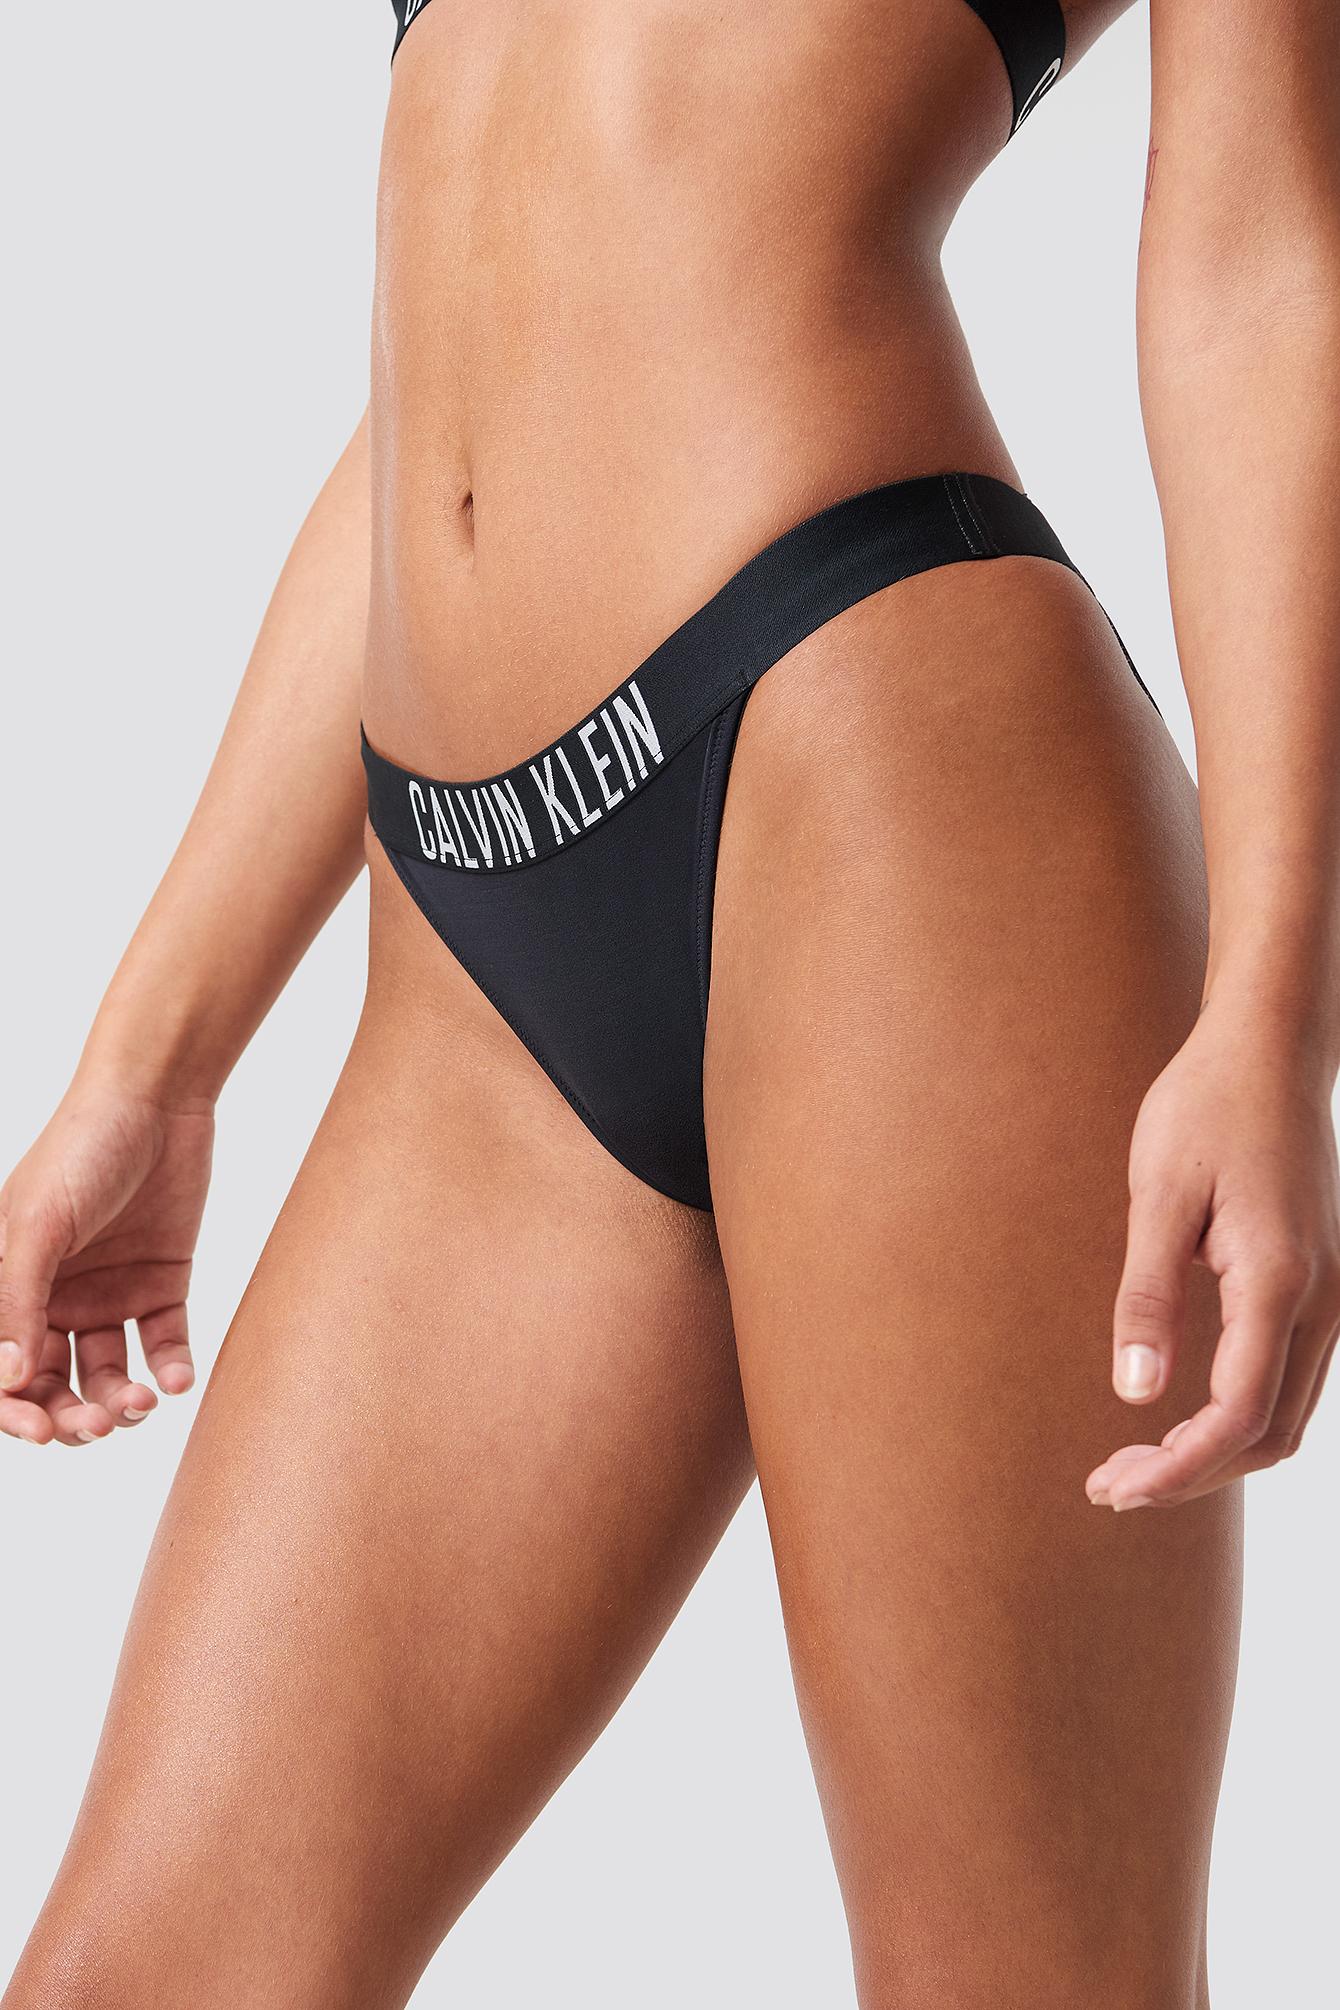 Calvin Klein Brazilian Bikini Bottom Black | Lyst